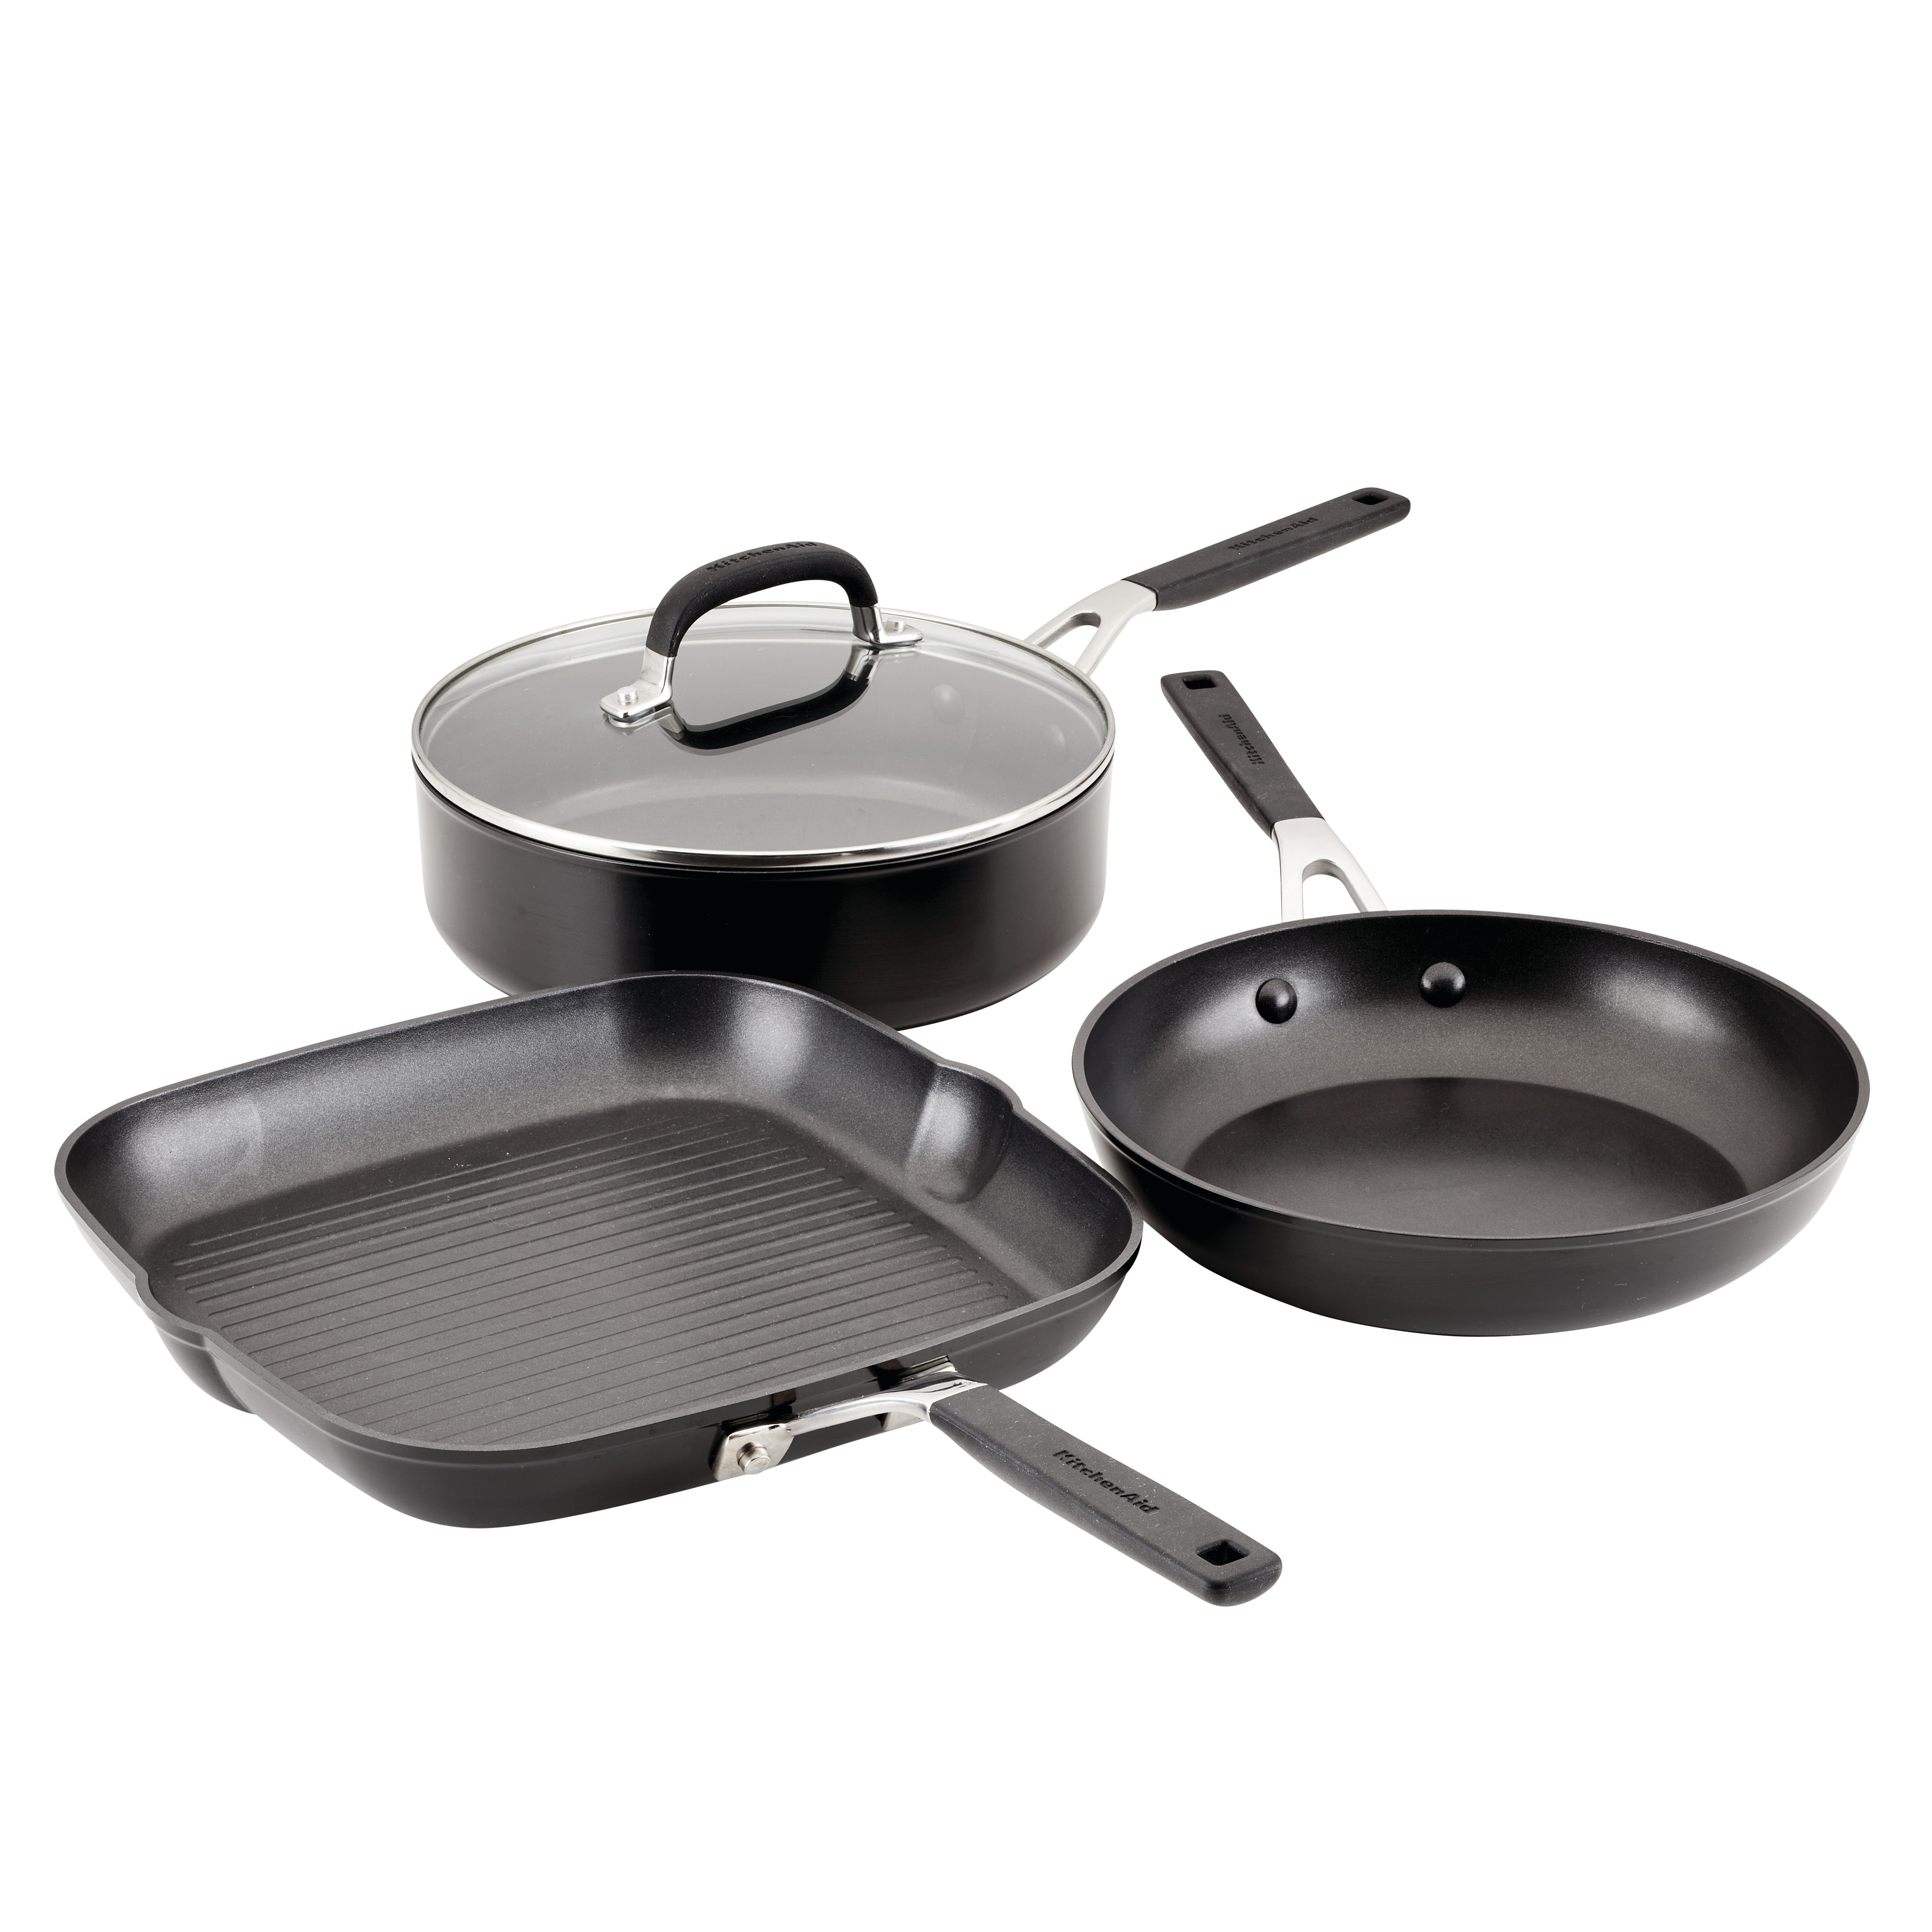  KitchenAid Hard Anodized Nonstick Cookware Pots and Pans Set,  10 Piece, Onyx Black: Home & Kitchen